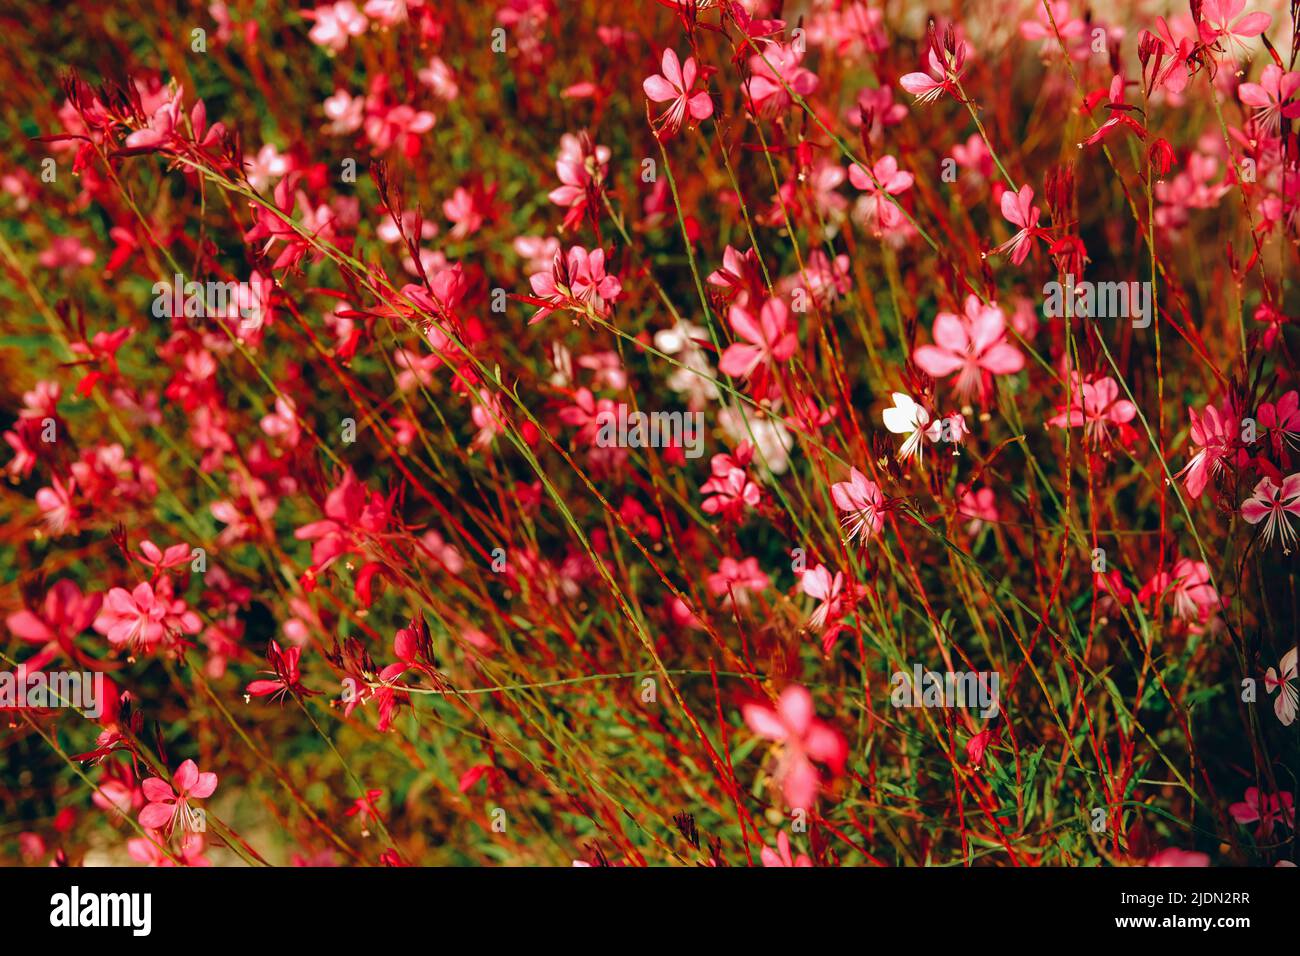 Enotera lindheimeri, fiore all'api di Lindheimer, gaura bianca, gaura rosa, alghe di Lindheimer, E fiore di piume rosa indiano sfondo prato. Foto Stock